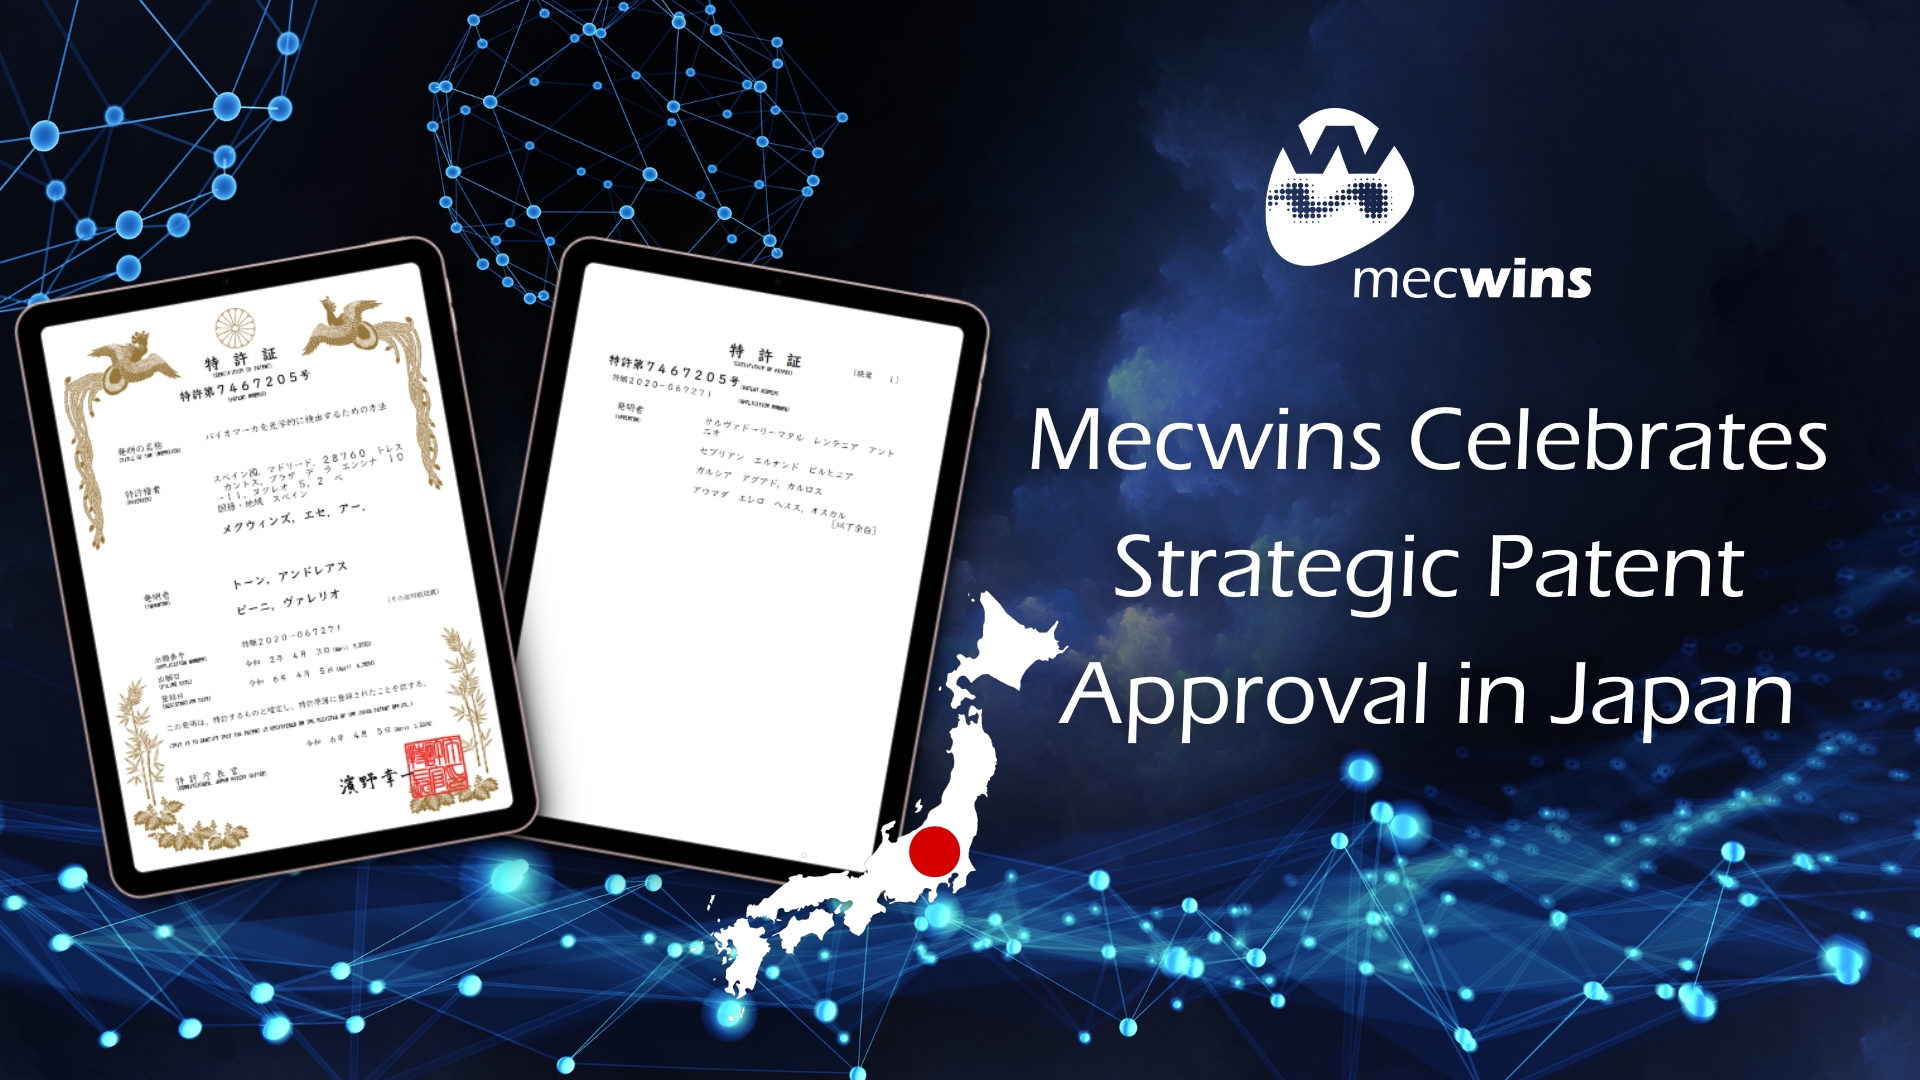 Mecwins Celebrates Strategic Patent Approval in Japan